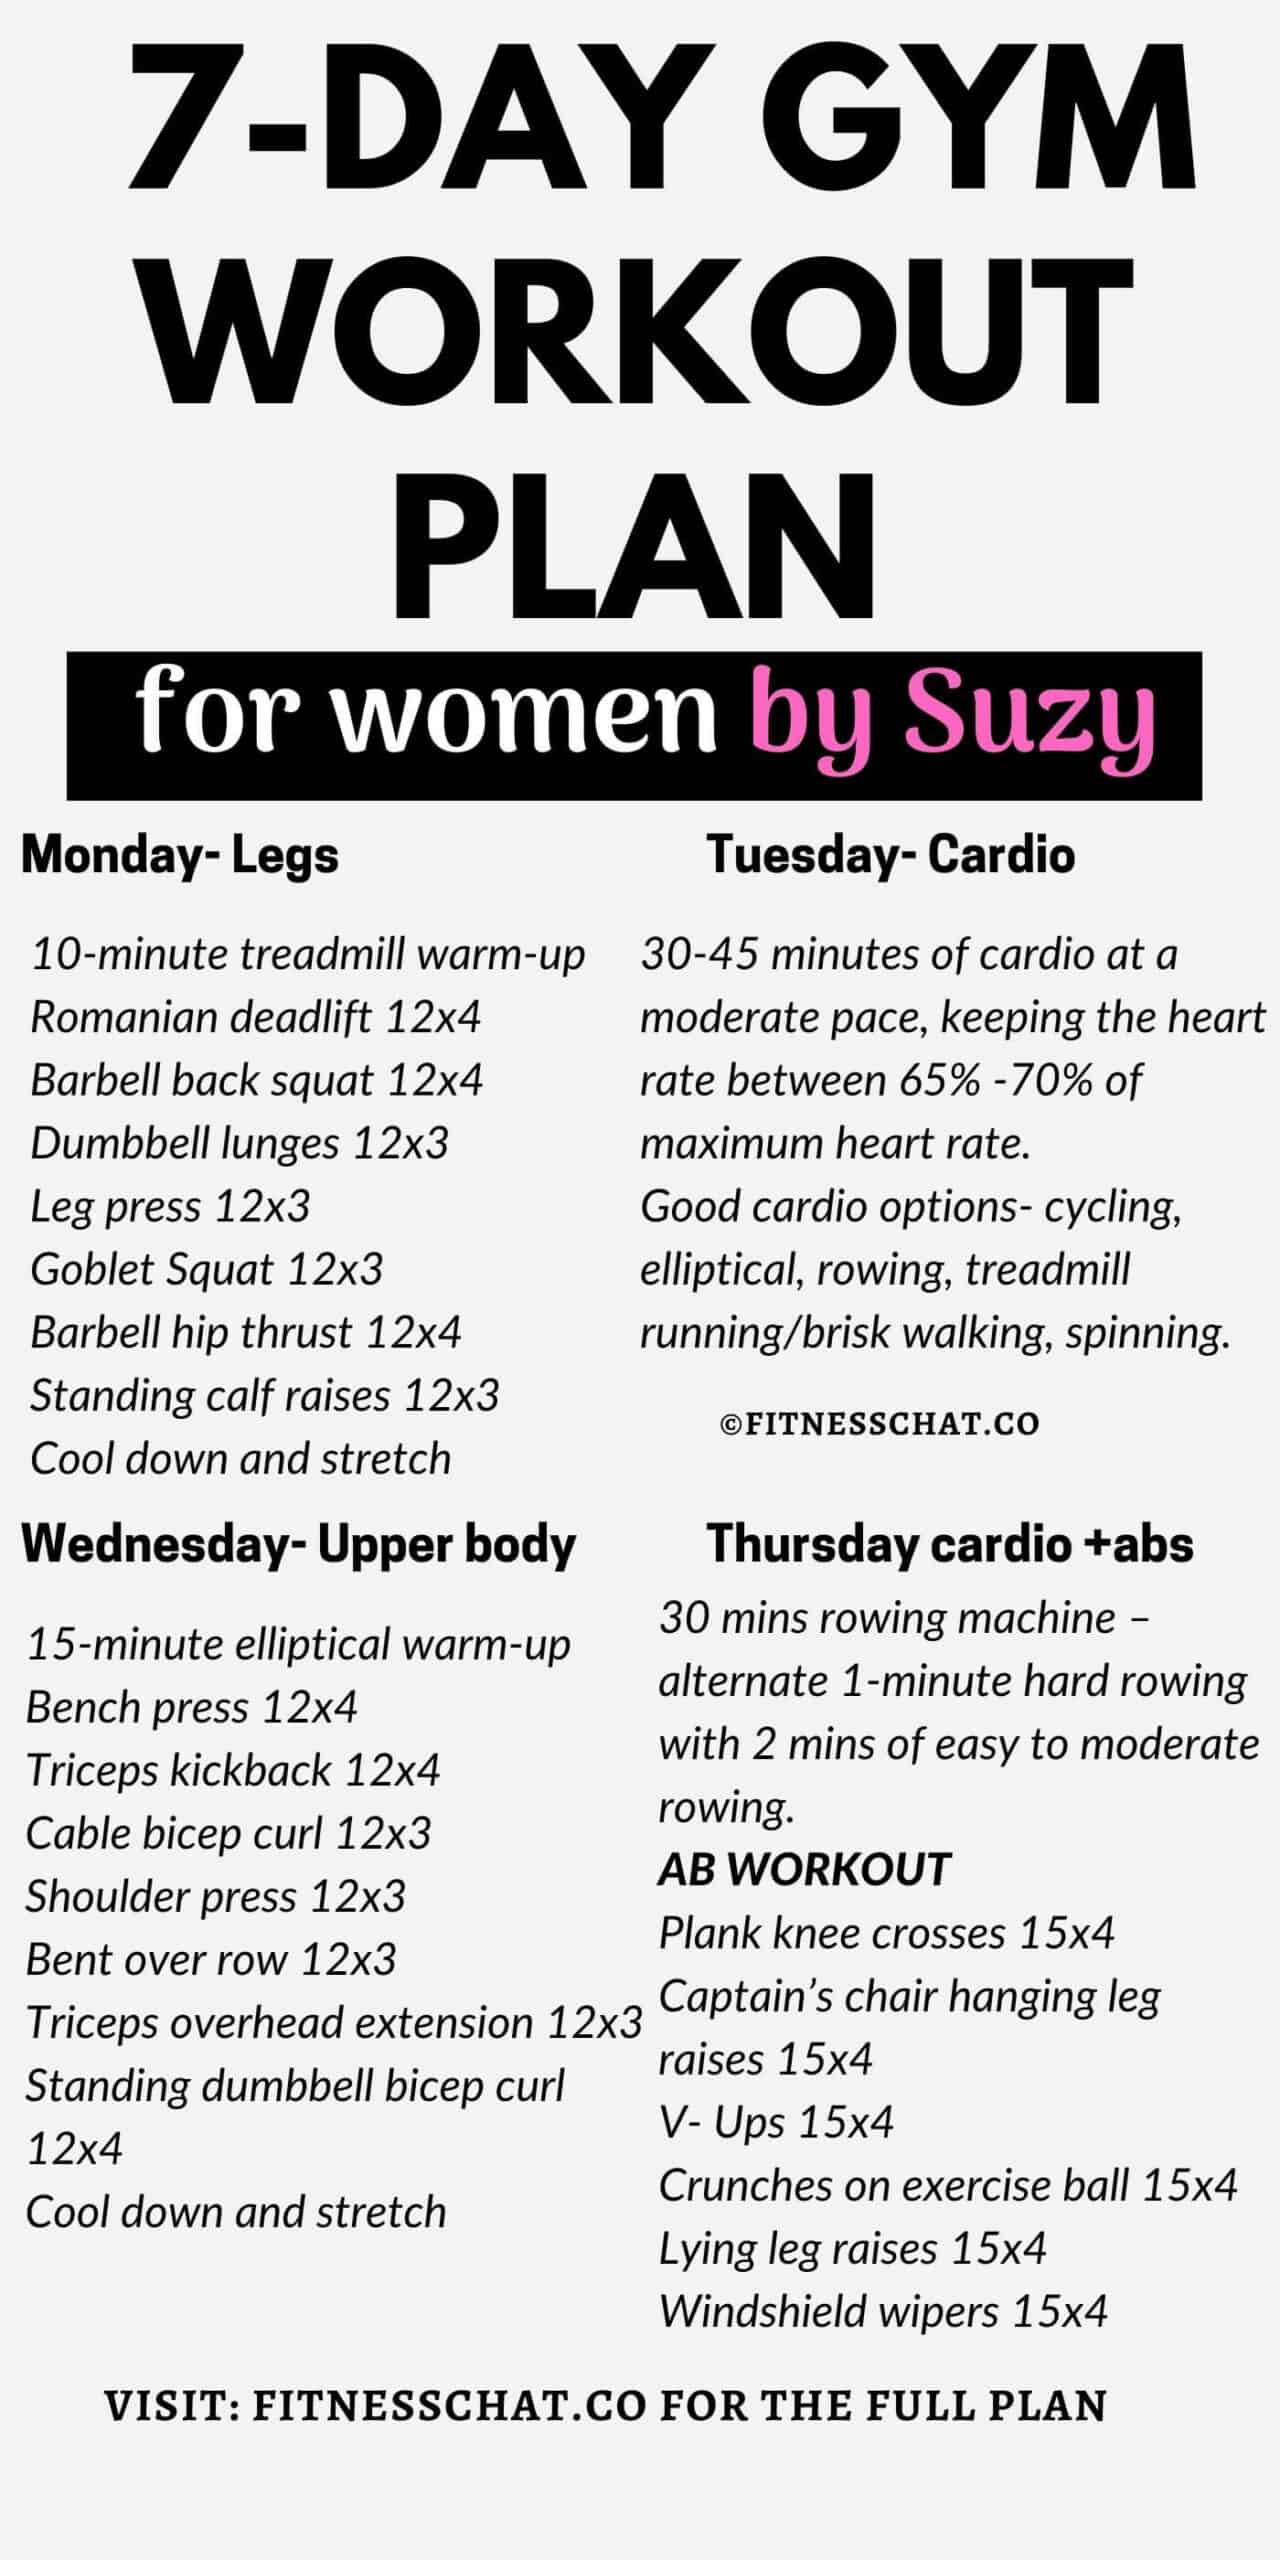 7-day gym workout plan